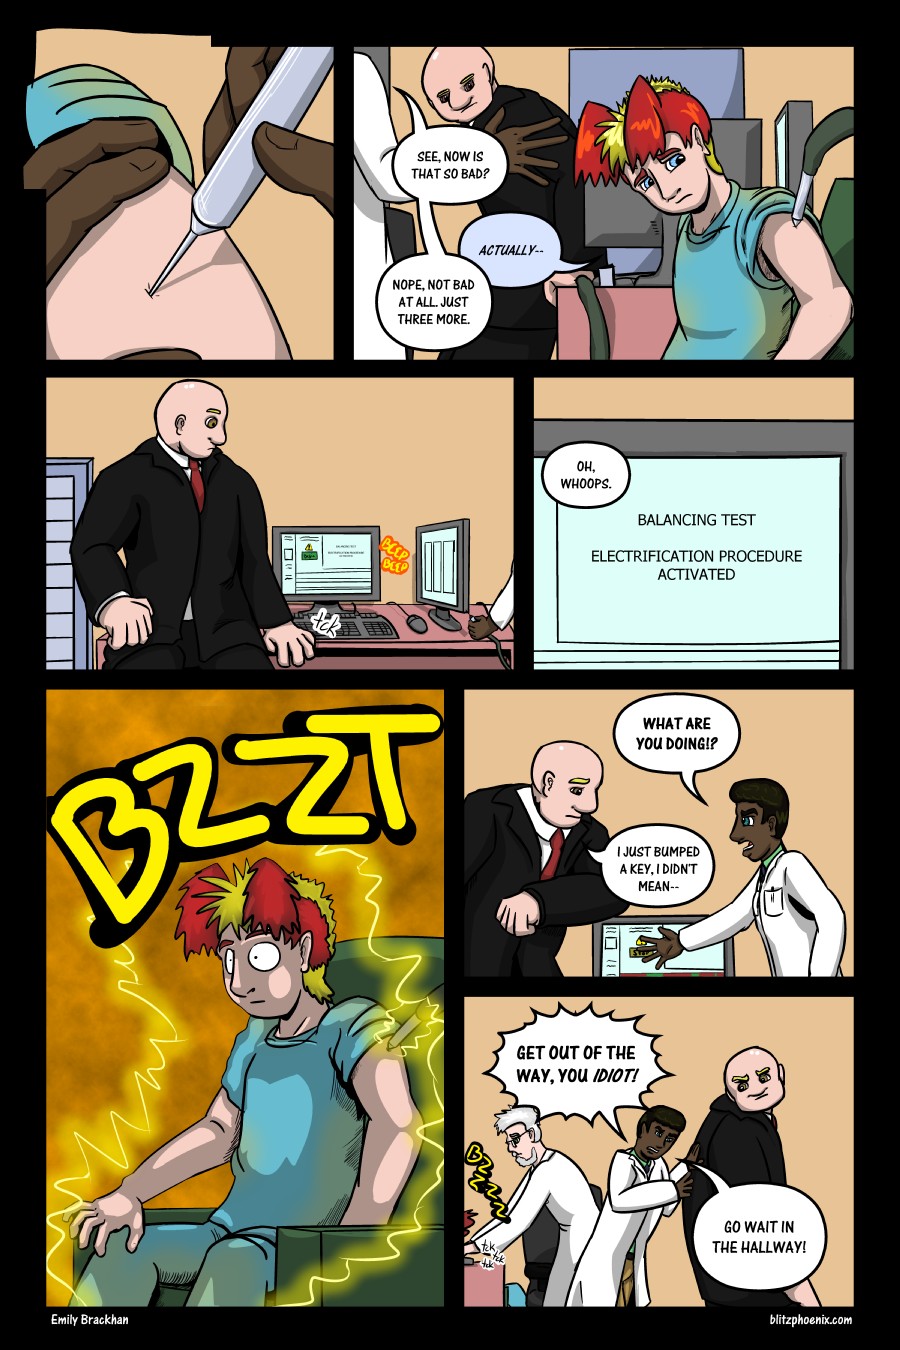 Blitz Phoenix - Chapter 3, Page 6